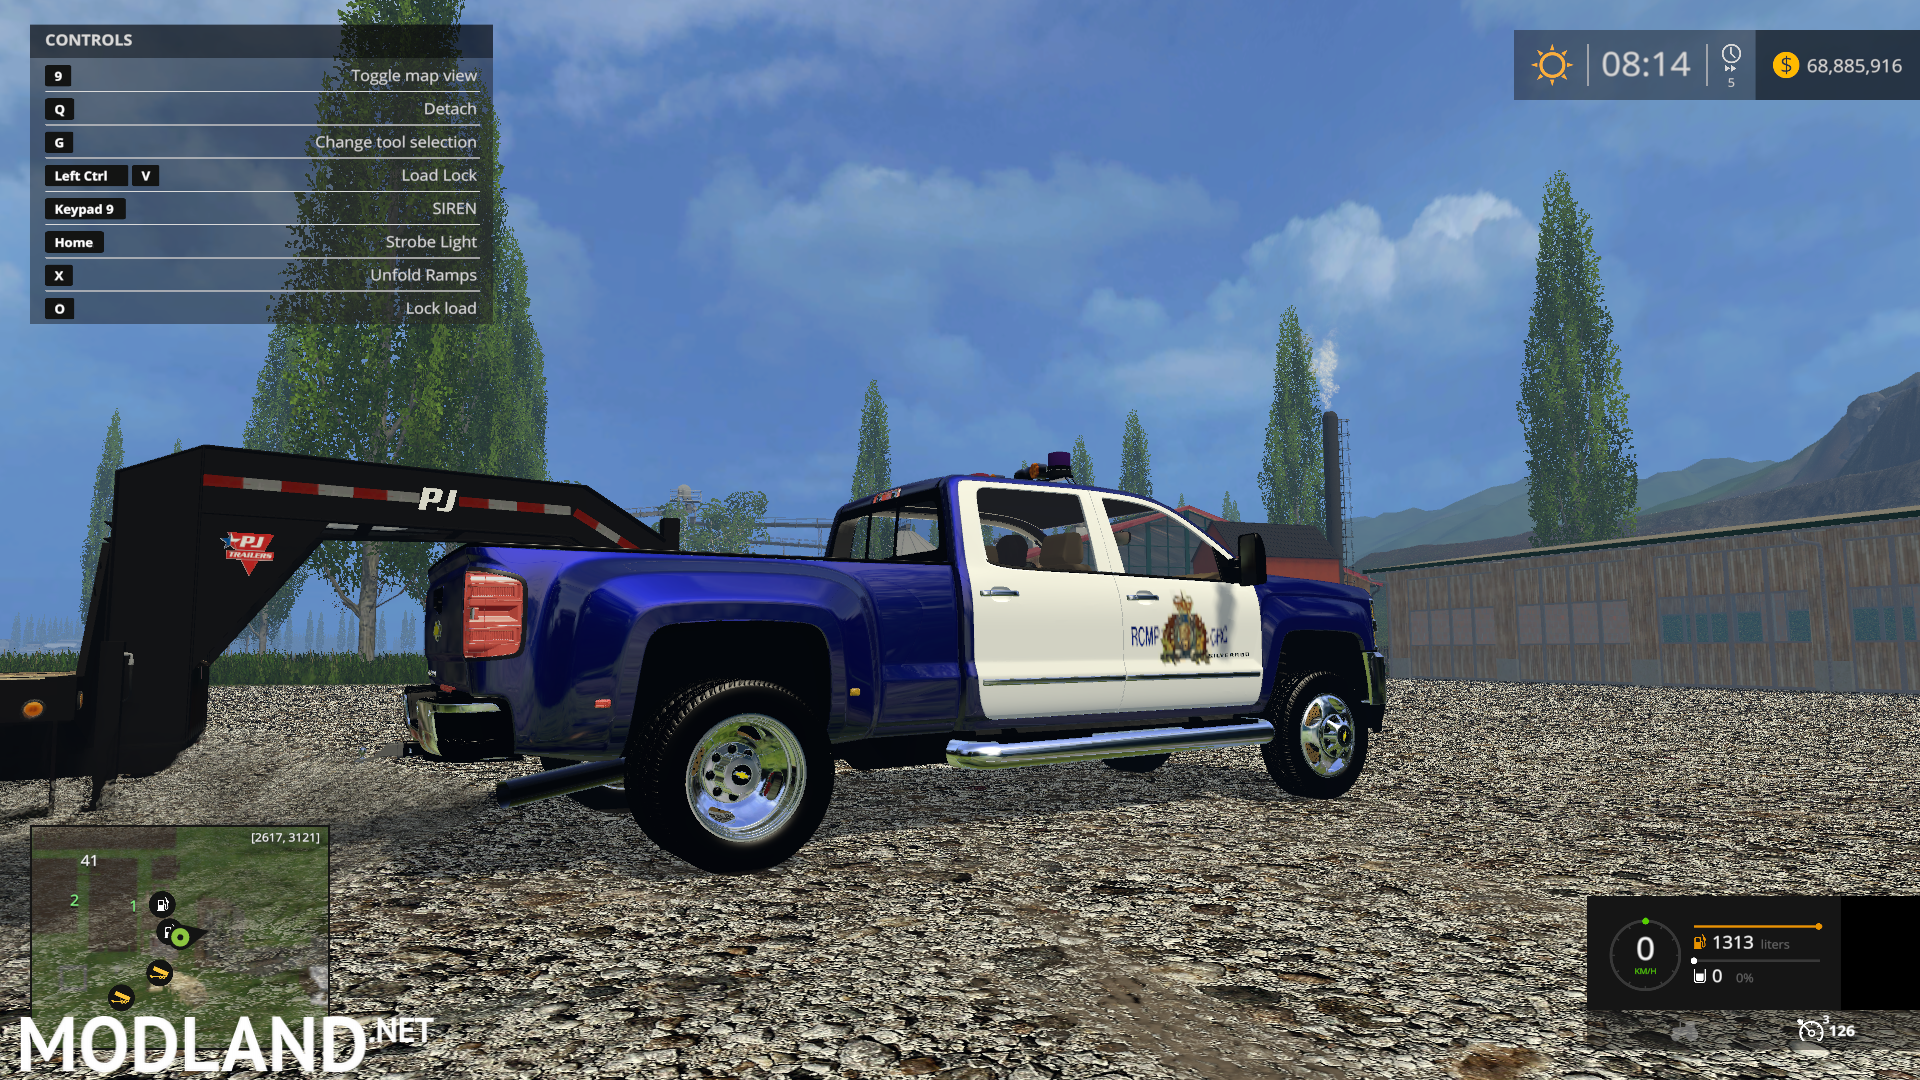 Chevy Silverado RCMP Police Truck mod for Farming Simulator 2015 / 15